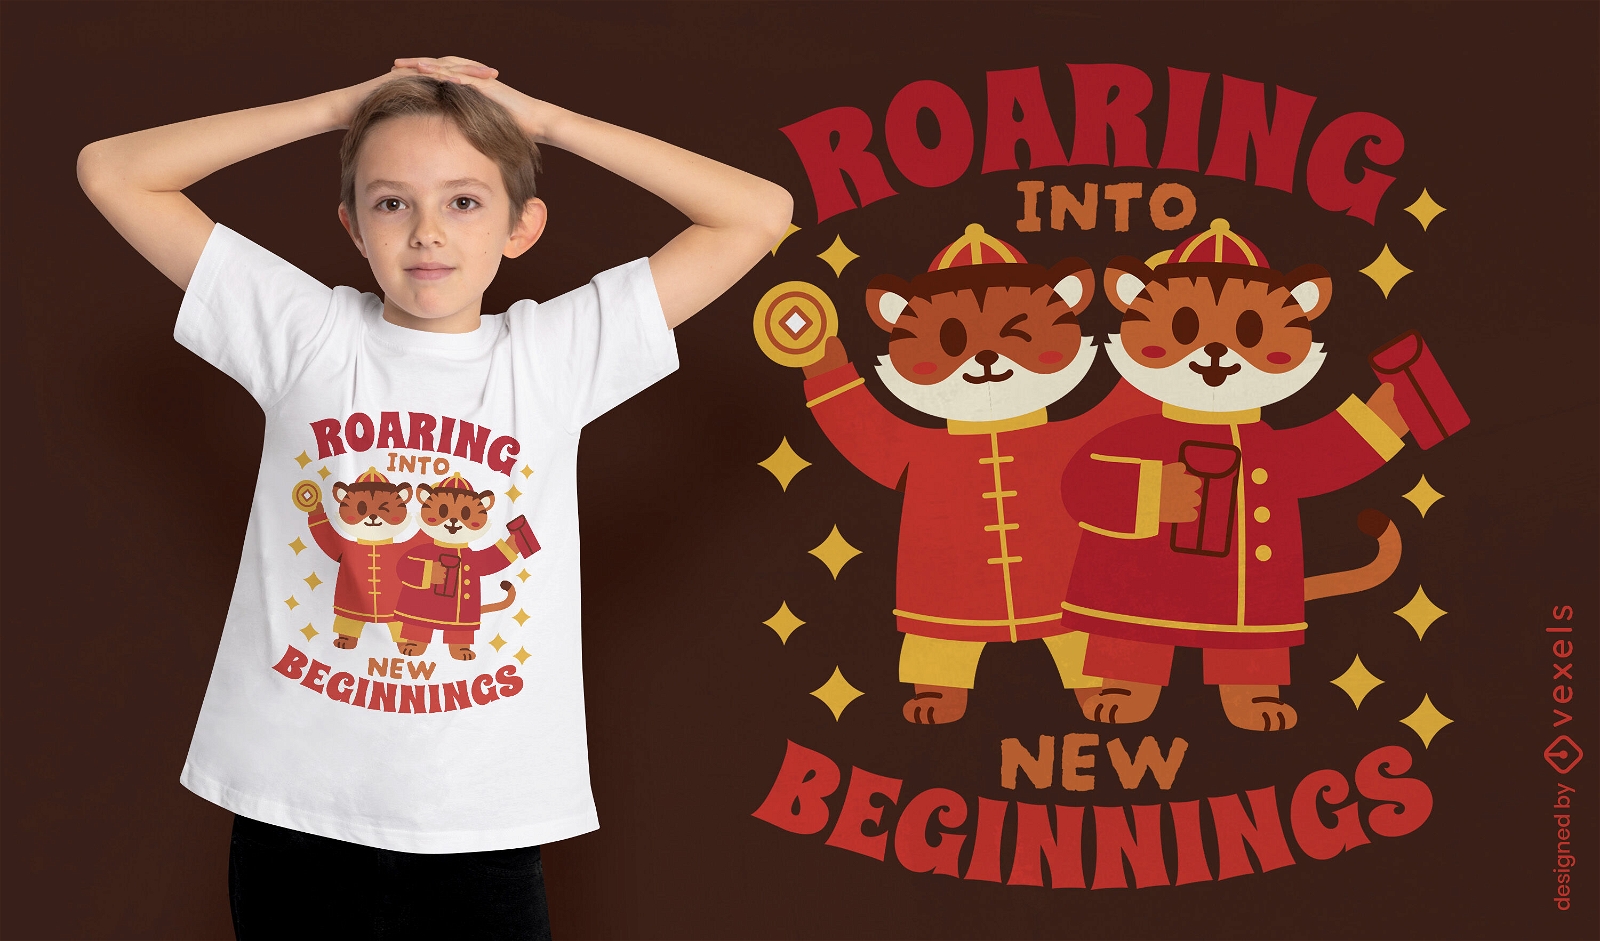 Roaring into new beginnings t-shirt design